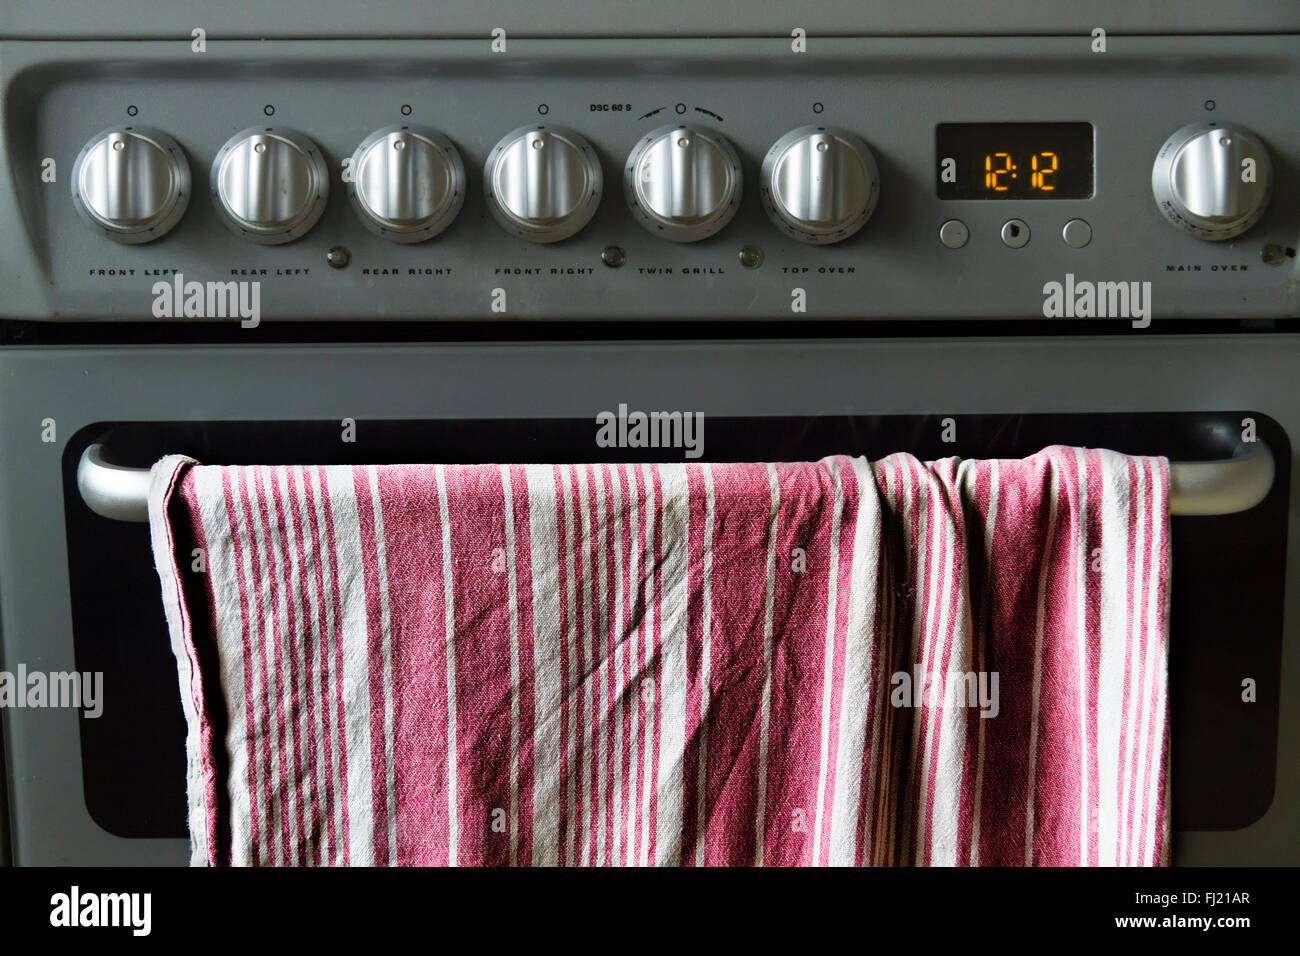 https://c8.alamy.com/comp/FJ21AR/tea-towel-or-drying-cloth-hanging-on-an-oven-door-handle-of-a-domestic-FJ21AR.jpg